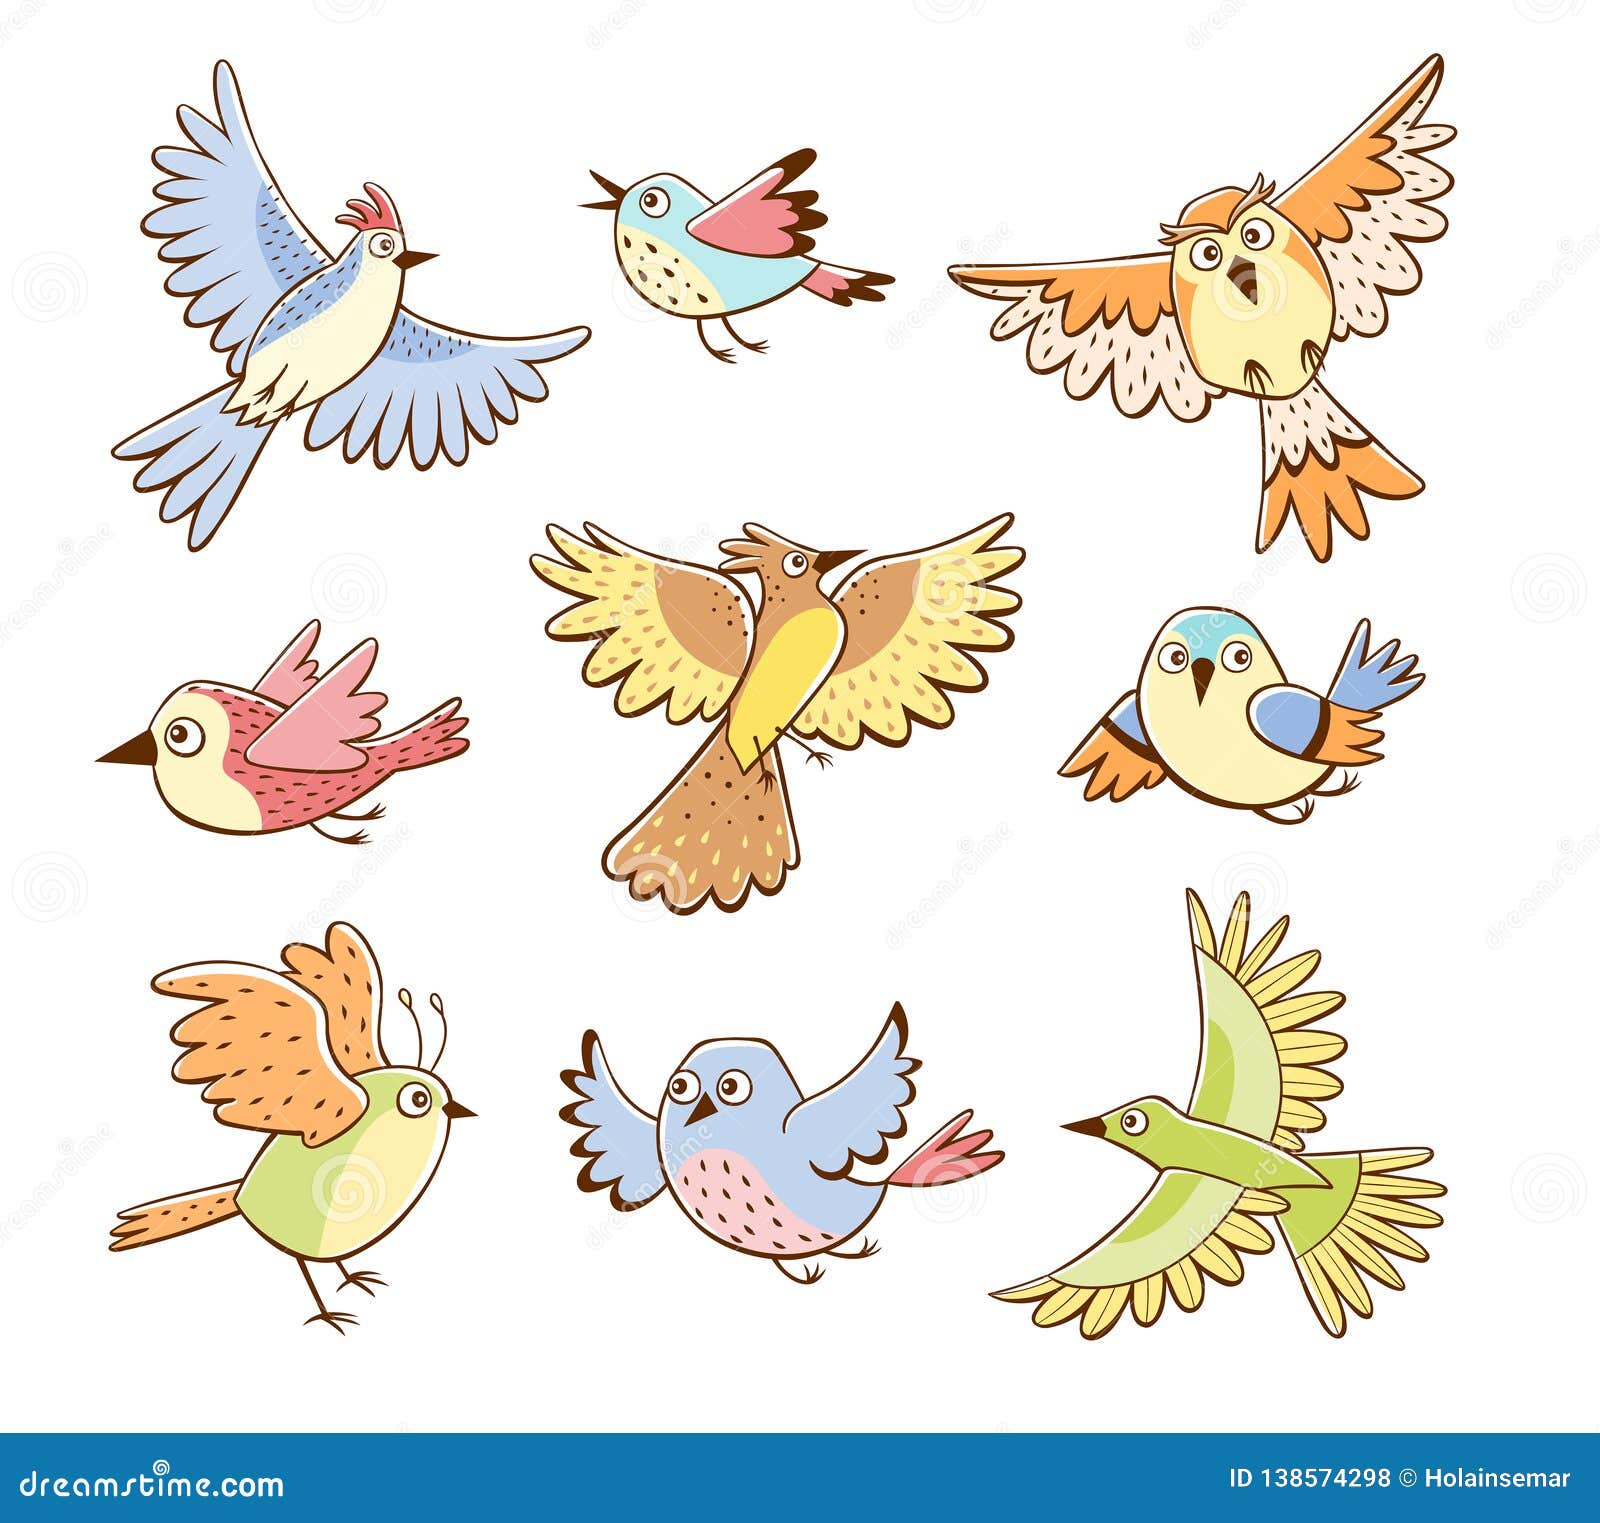 27,490 Bird Pencil Drawing Images, Stock Photos & Vectors | Shutterstock